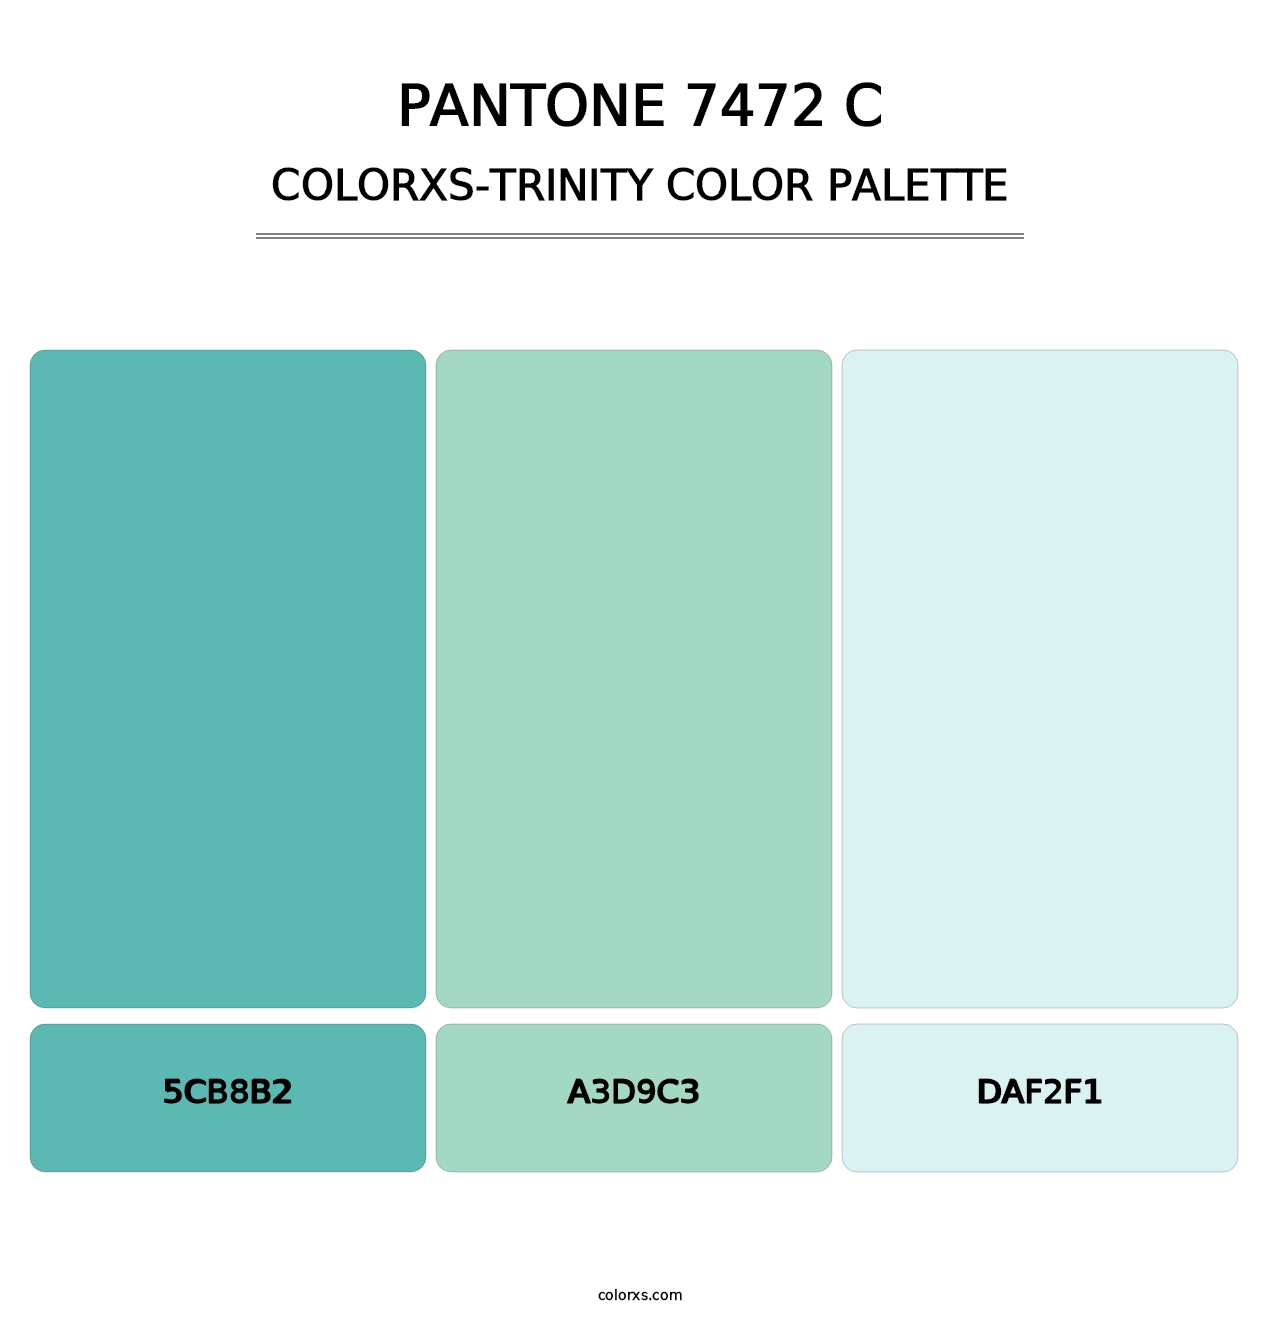 PANTONE 7472 C - Colorxs Trinity Palette